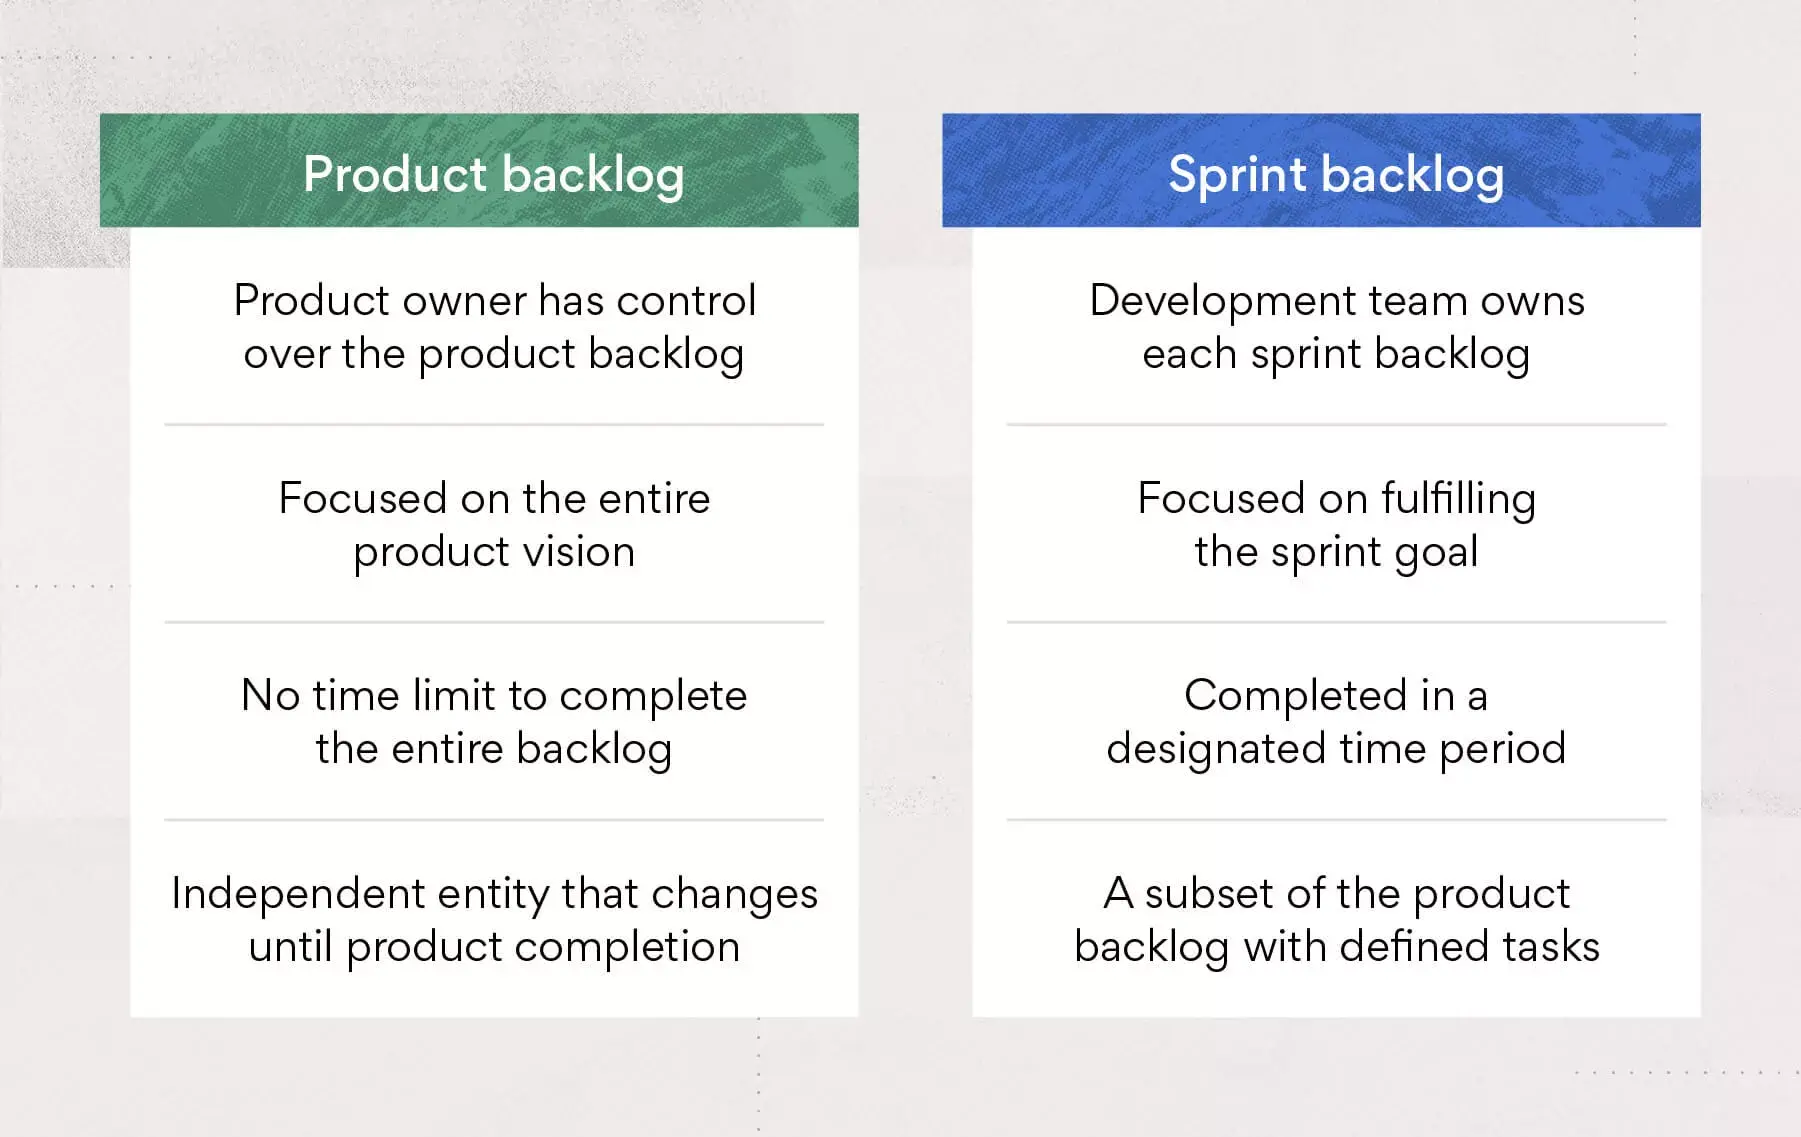 Sprint backlog vs. product backlog